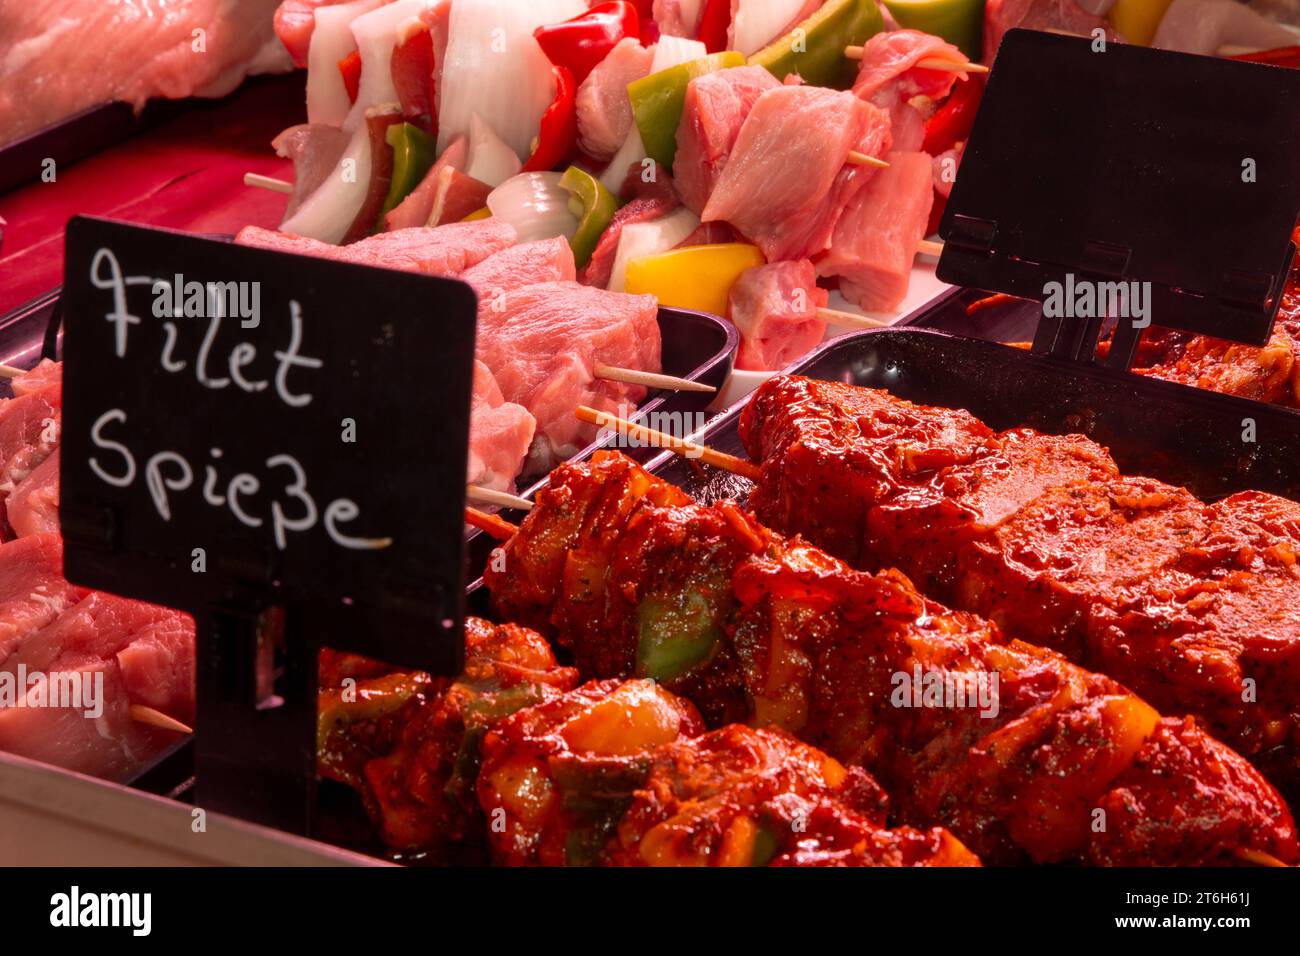 Fleischtheke in einer Metzgerei *** Meat counter in a butchers shop Copyright: xx Credit: Imago/Alamy Live News Stock Photo